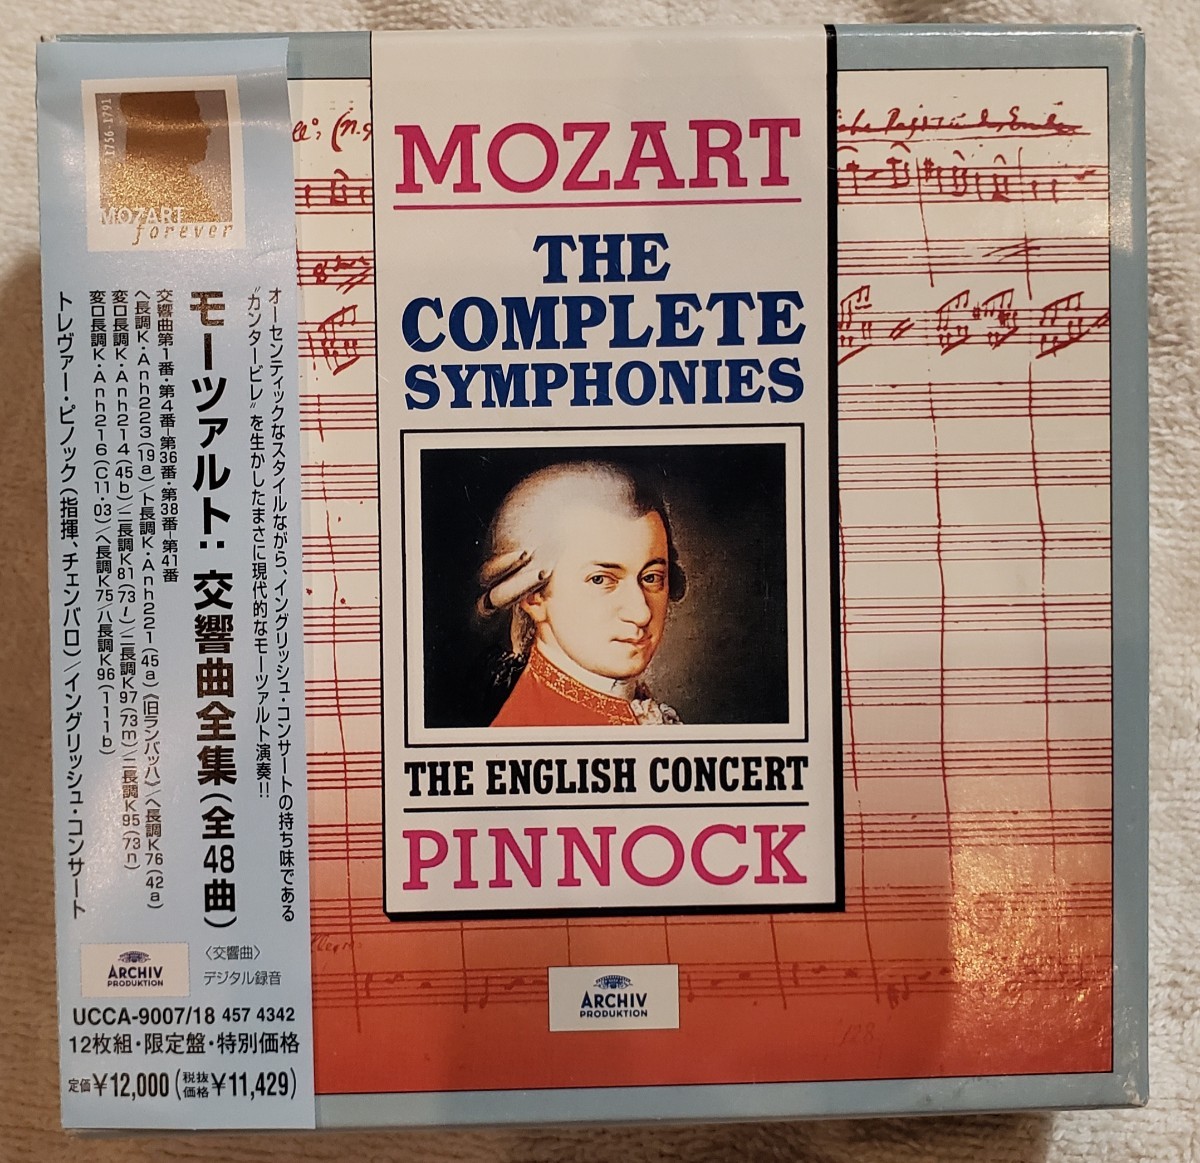 【12CD 限定盤】モーツァルト 交響曲全集(全48曲) トレヴァー・ピノック指揮 PINNOCK MOZART THE Complete Symphonies UCCA-9007/18